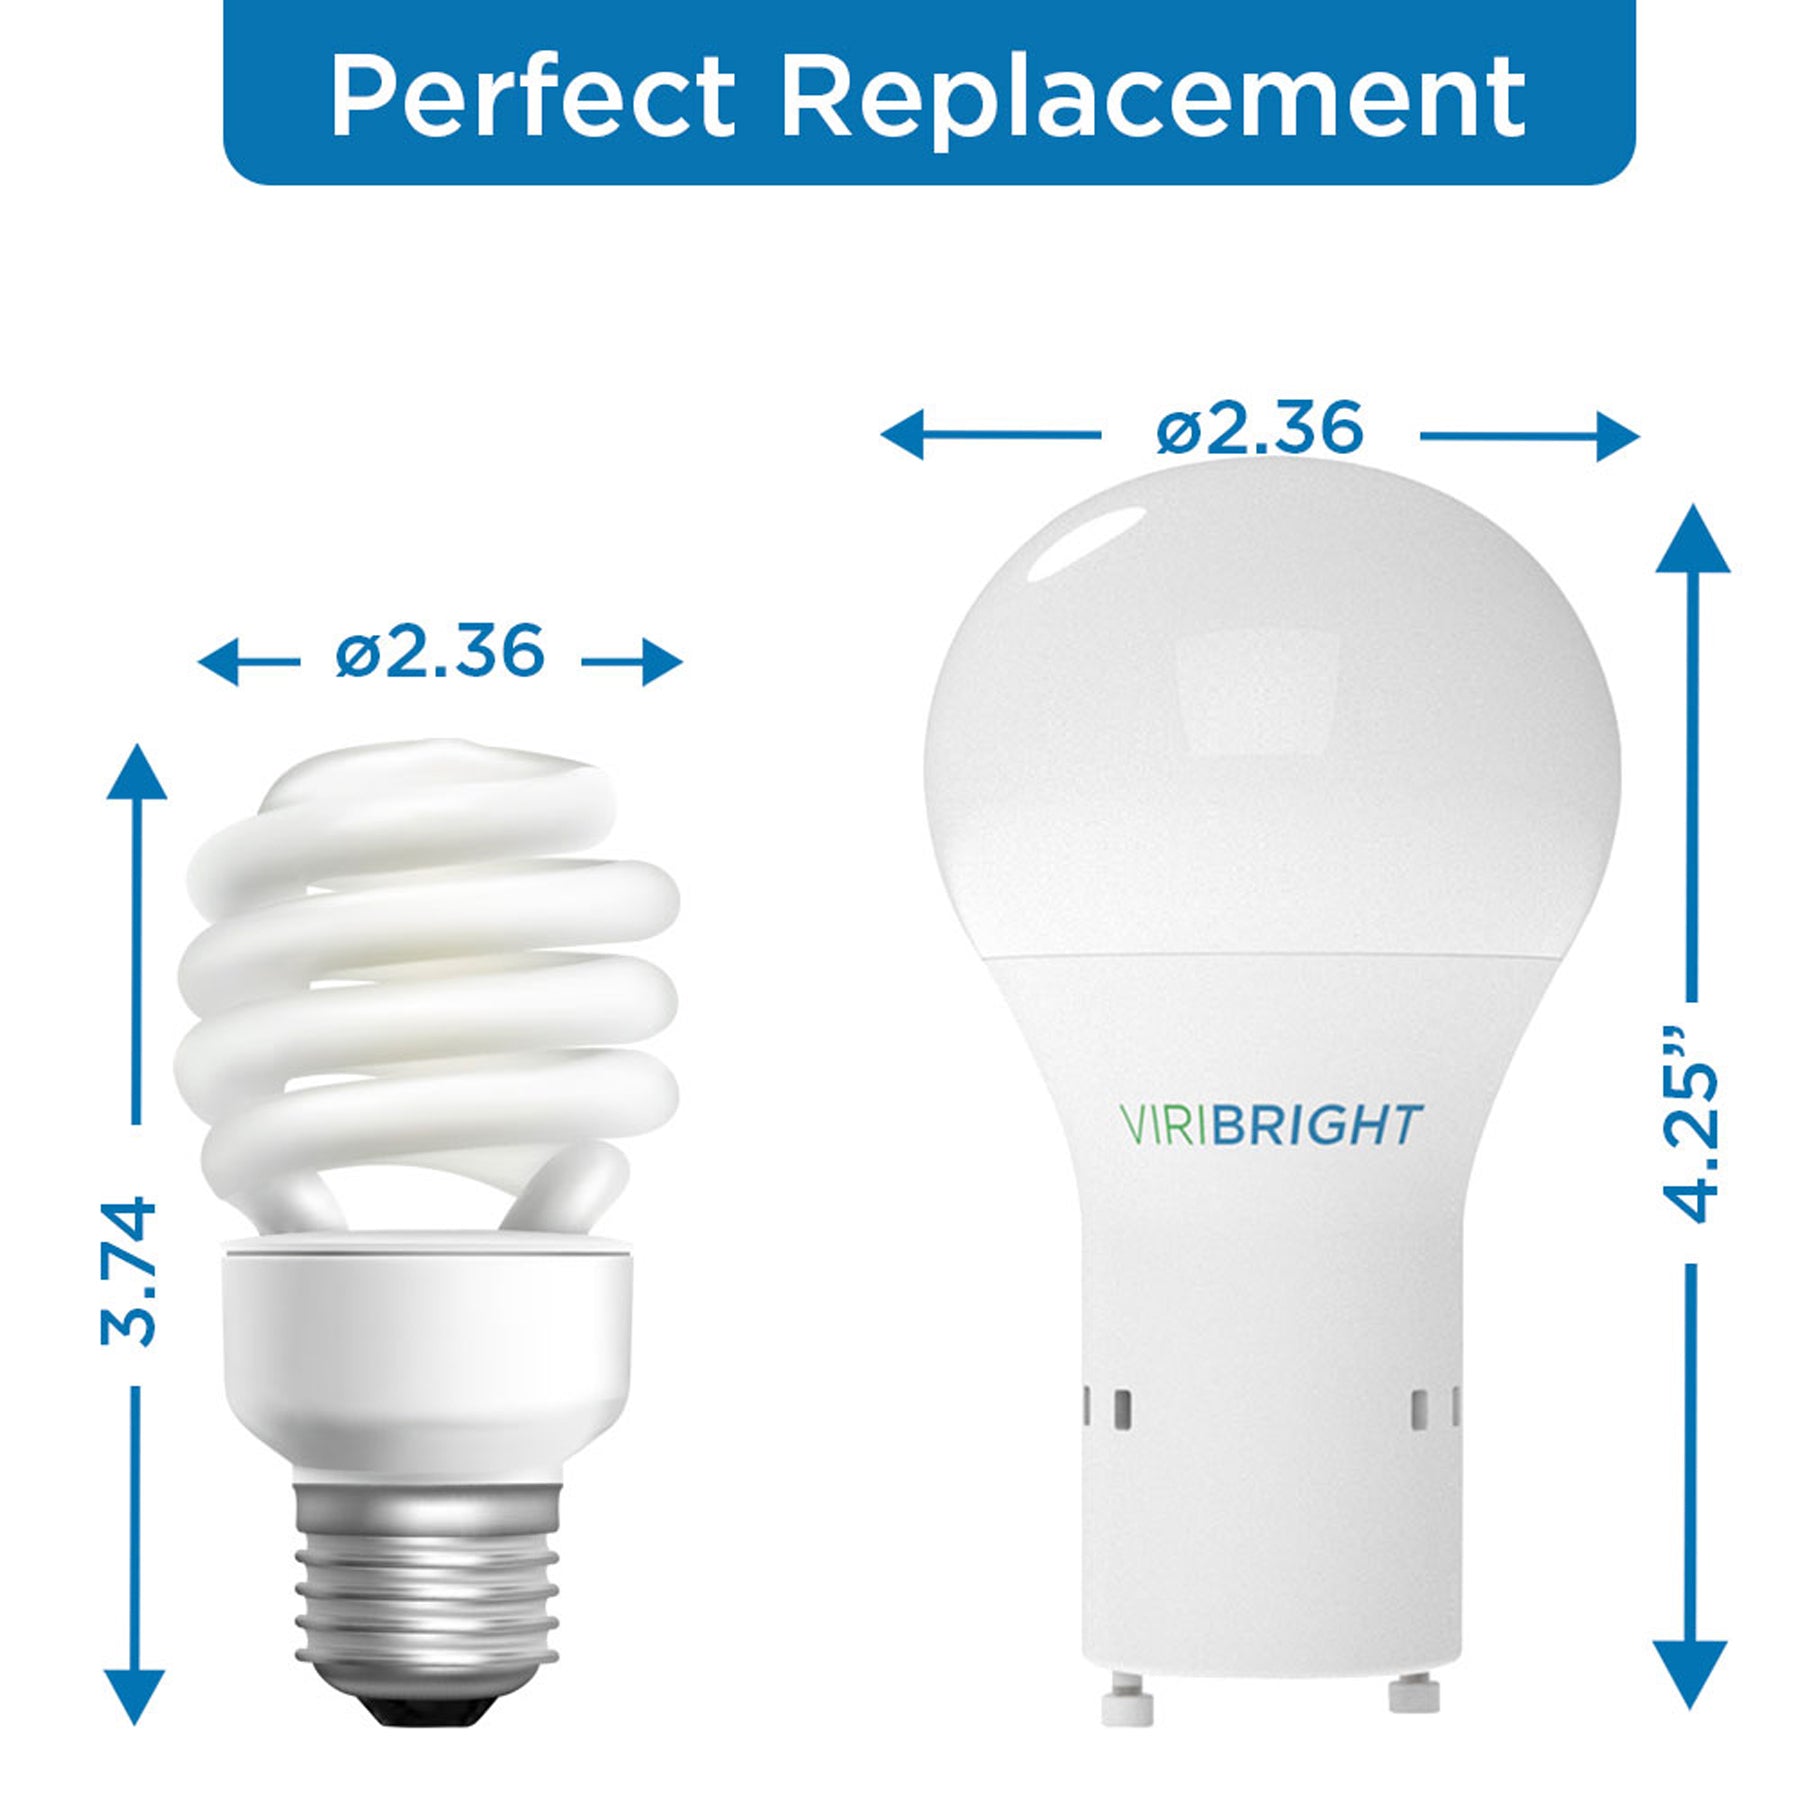 Viribright 60-Watt Equivalent A19 GU24 General Purpose LED Light Bulb